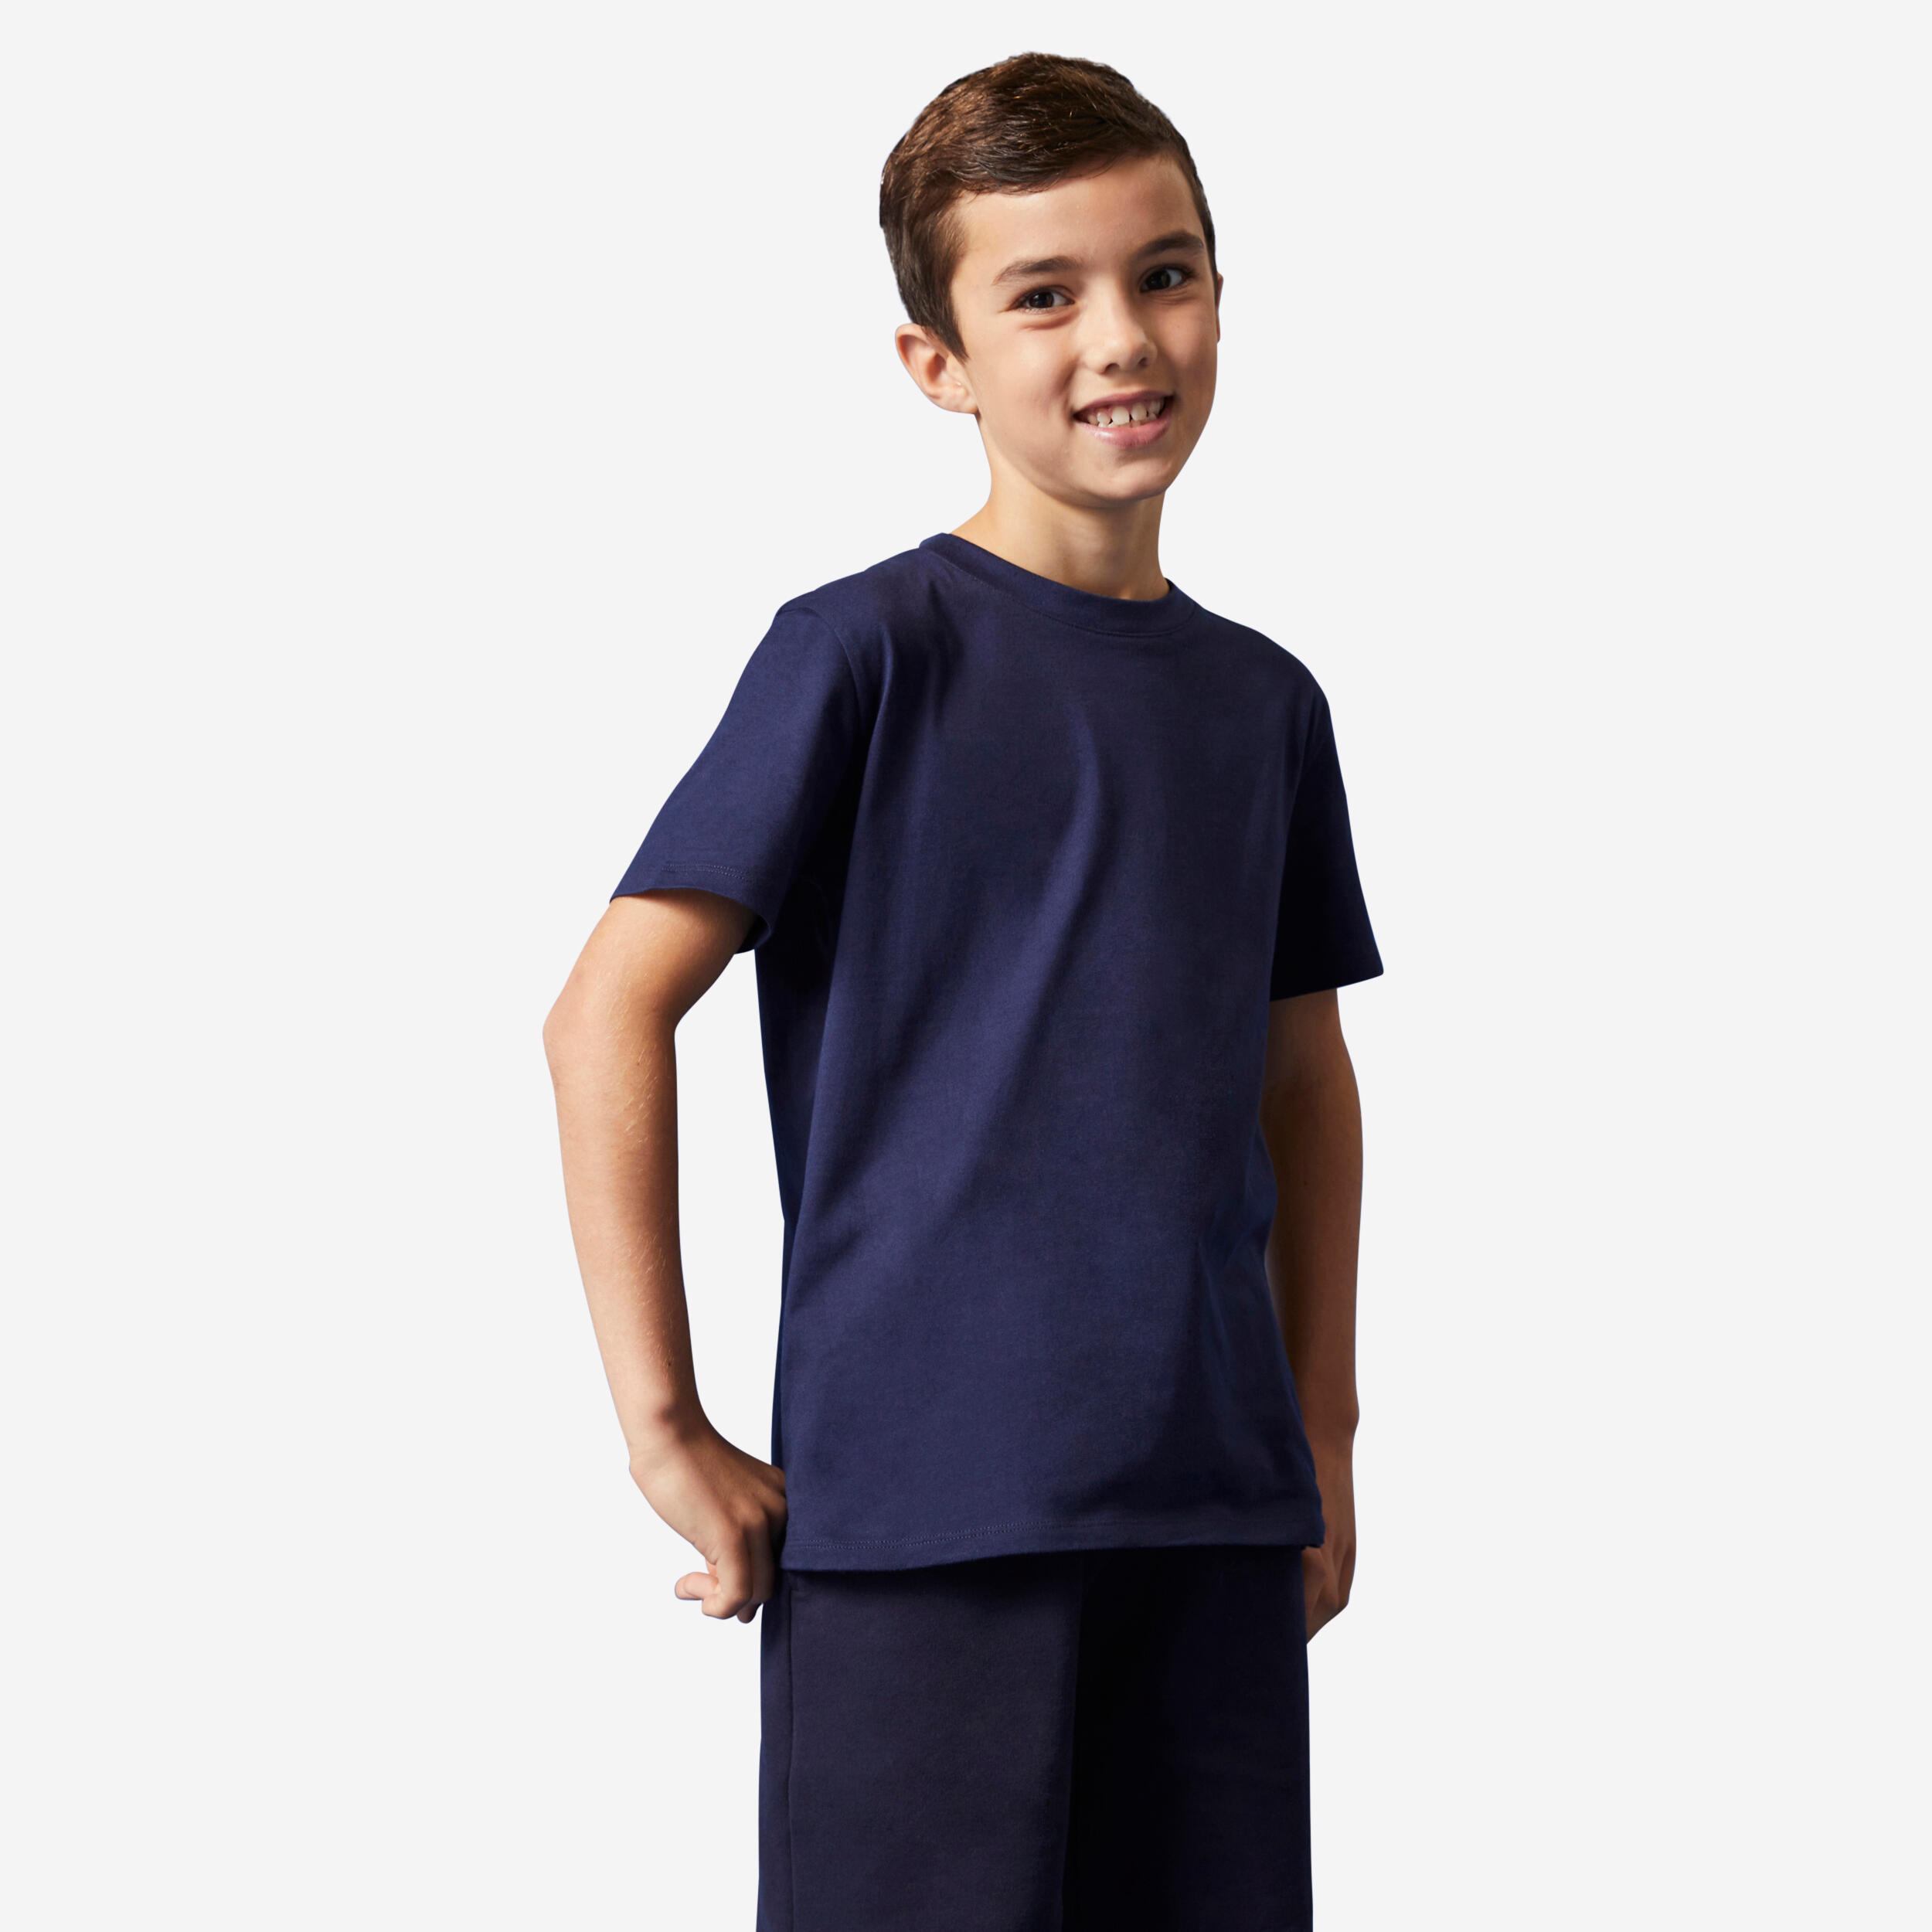 DOMYOS Kids' Unisex Cotton T-Shirt - Navy